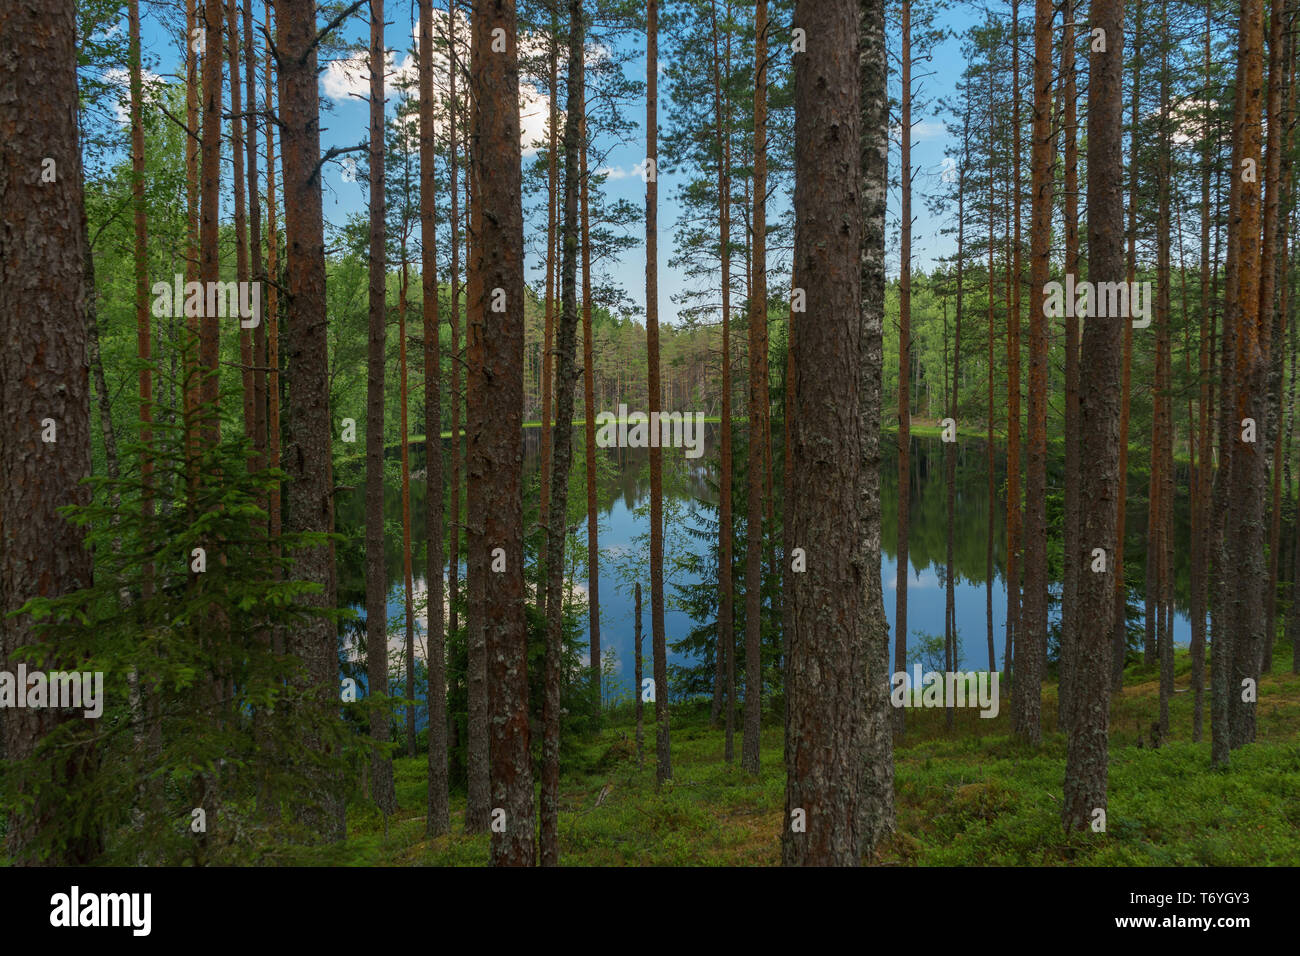 Vista al Lago a través de árboles de profundos bosques de coníferas, paisaje nórdico Foto de stock